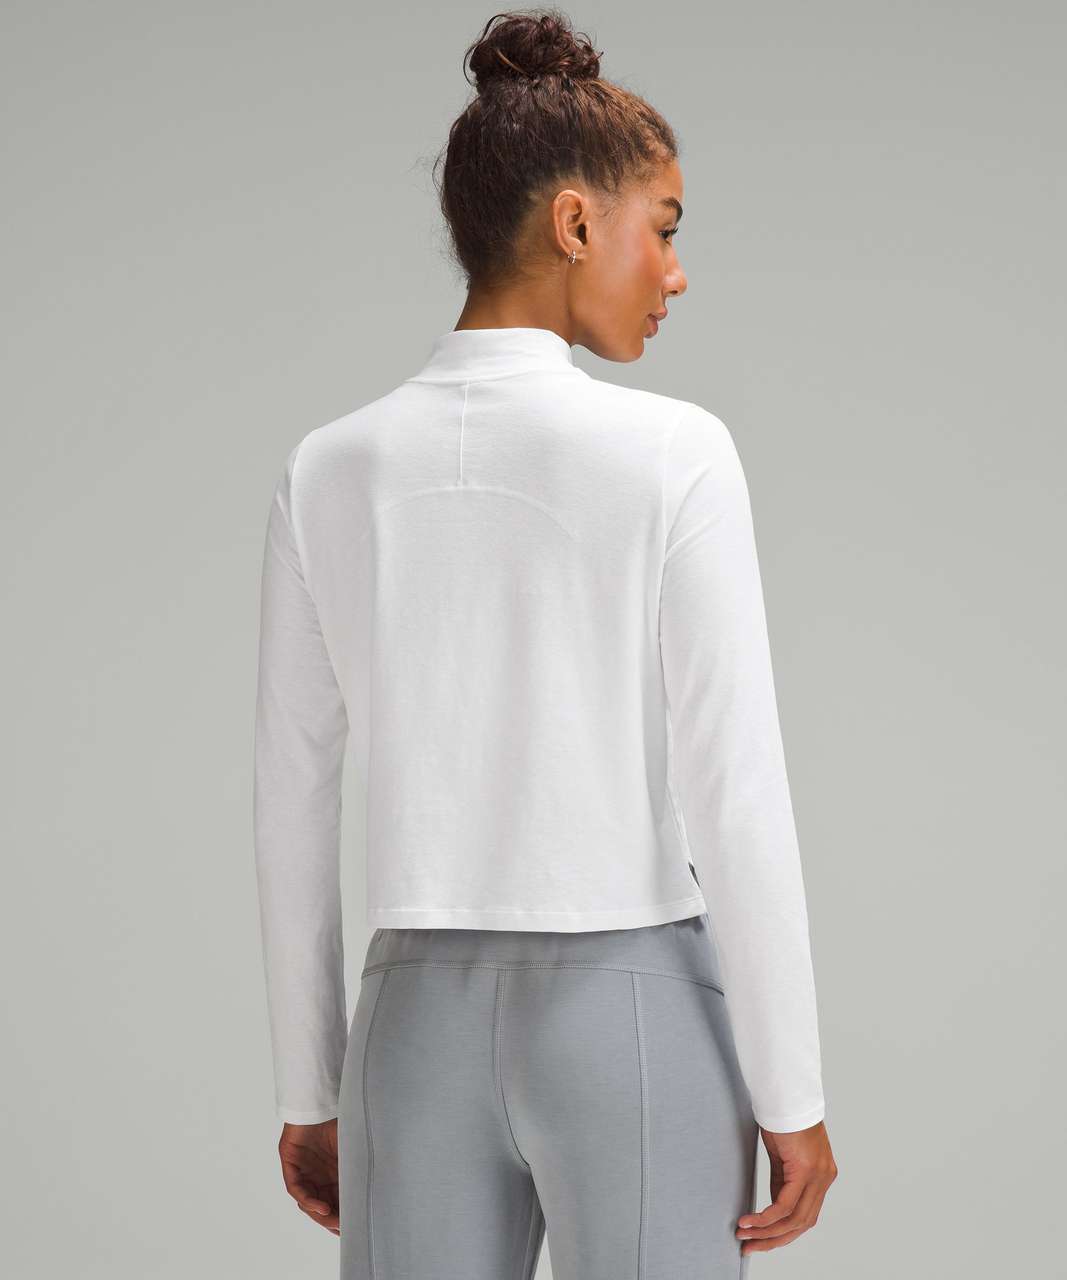 Lululemon Classic-Fit Cotton-Blend Mockneck Long-Sleeve Shirt - White